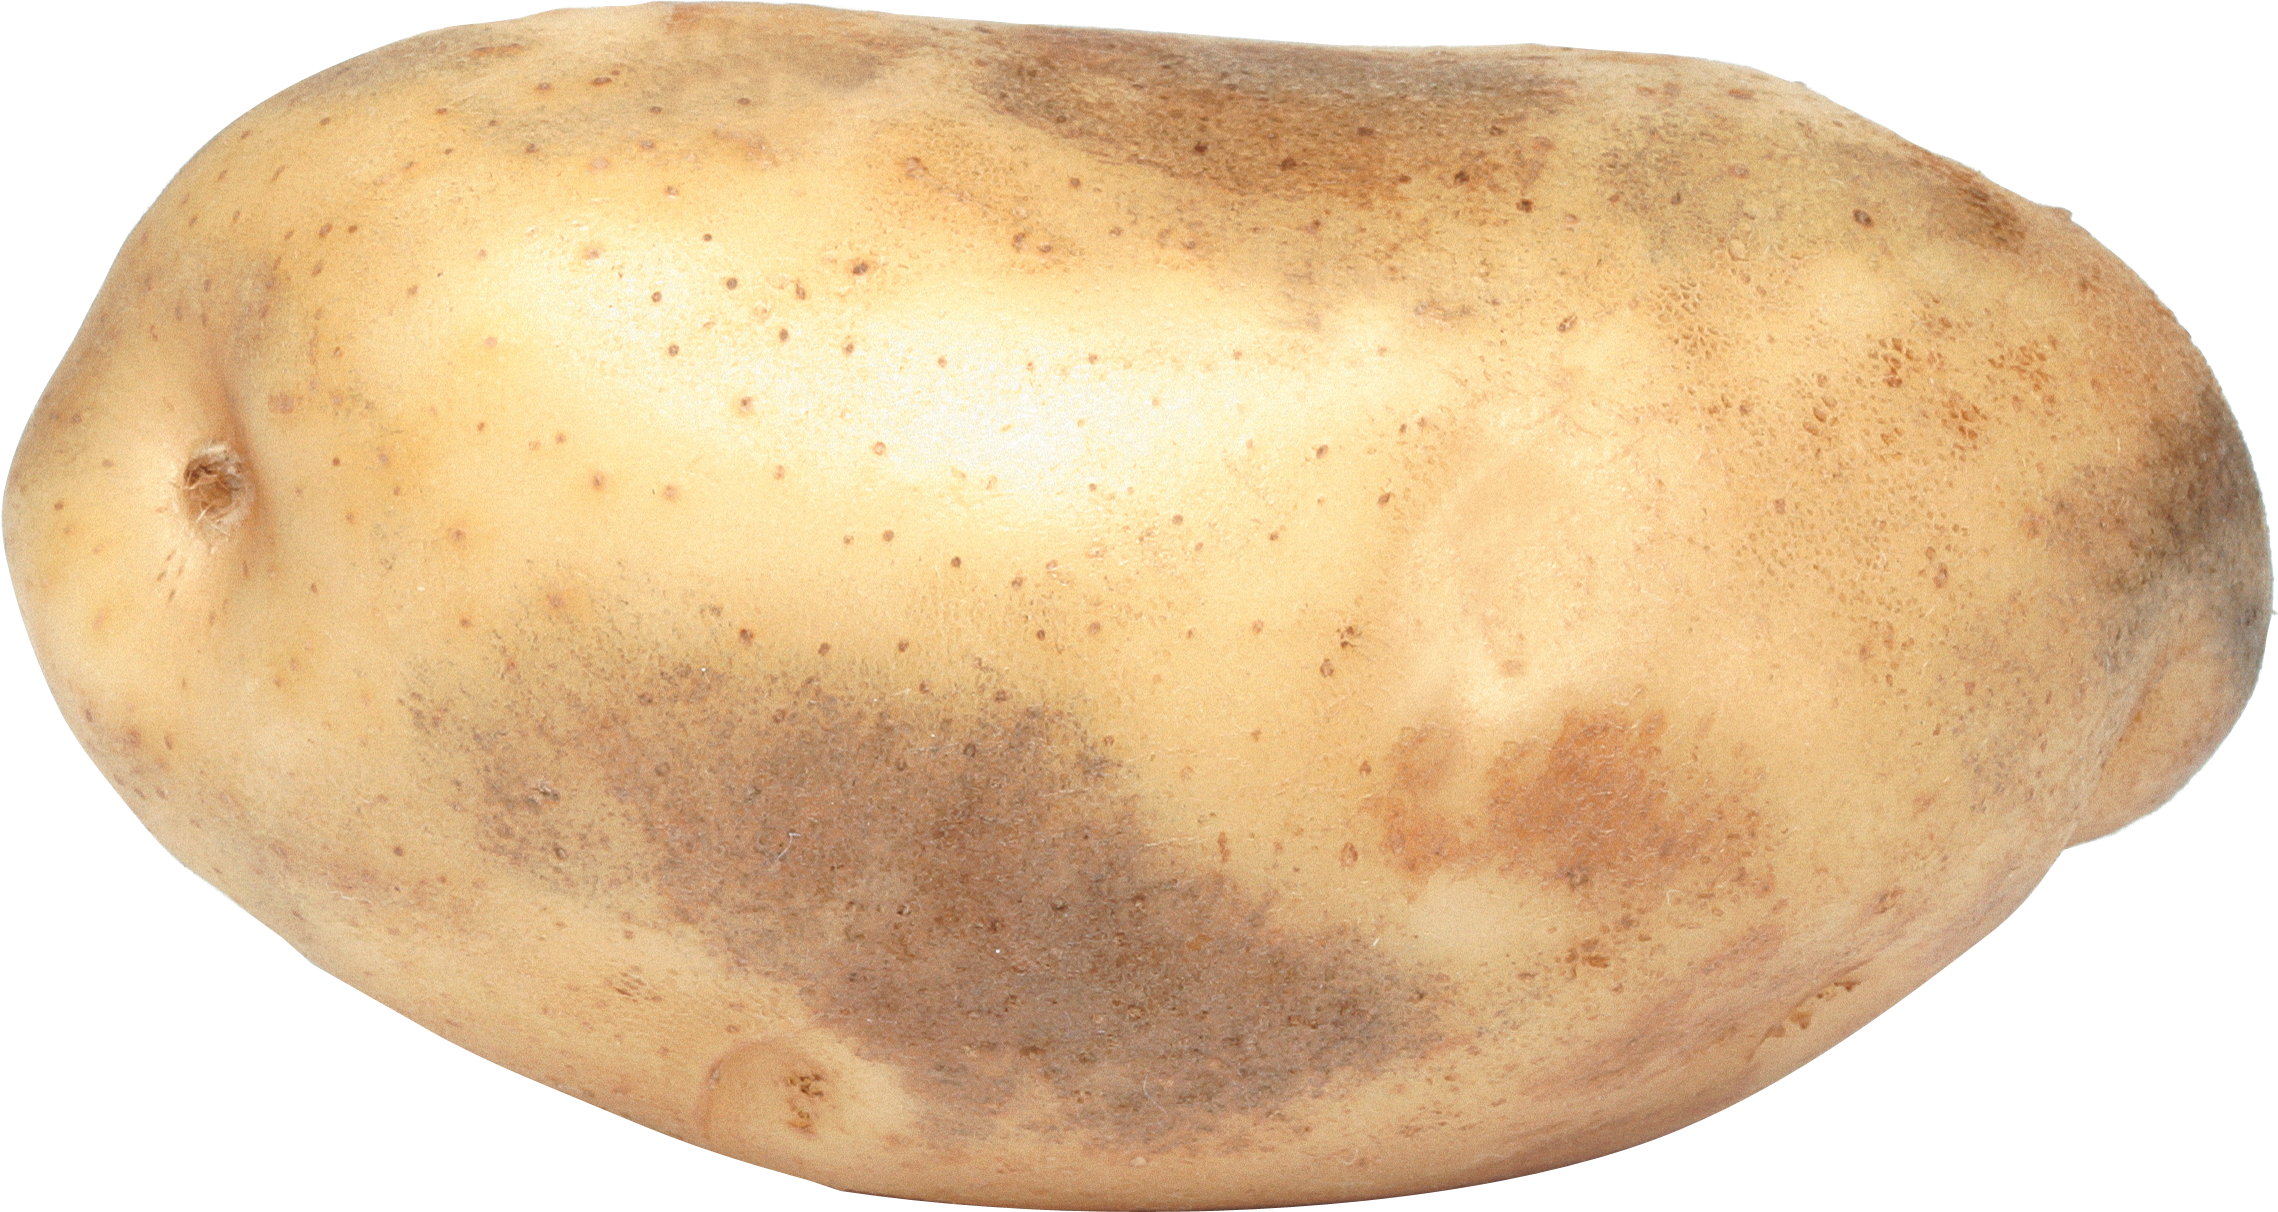 Potato Png image #38730